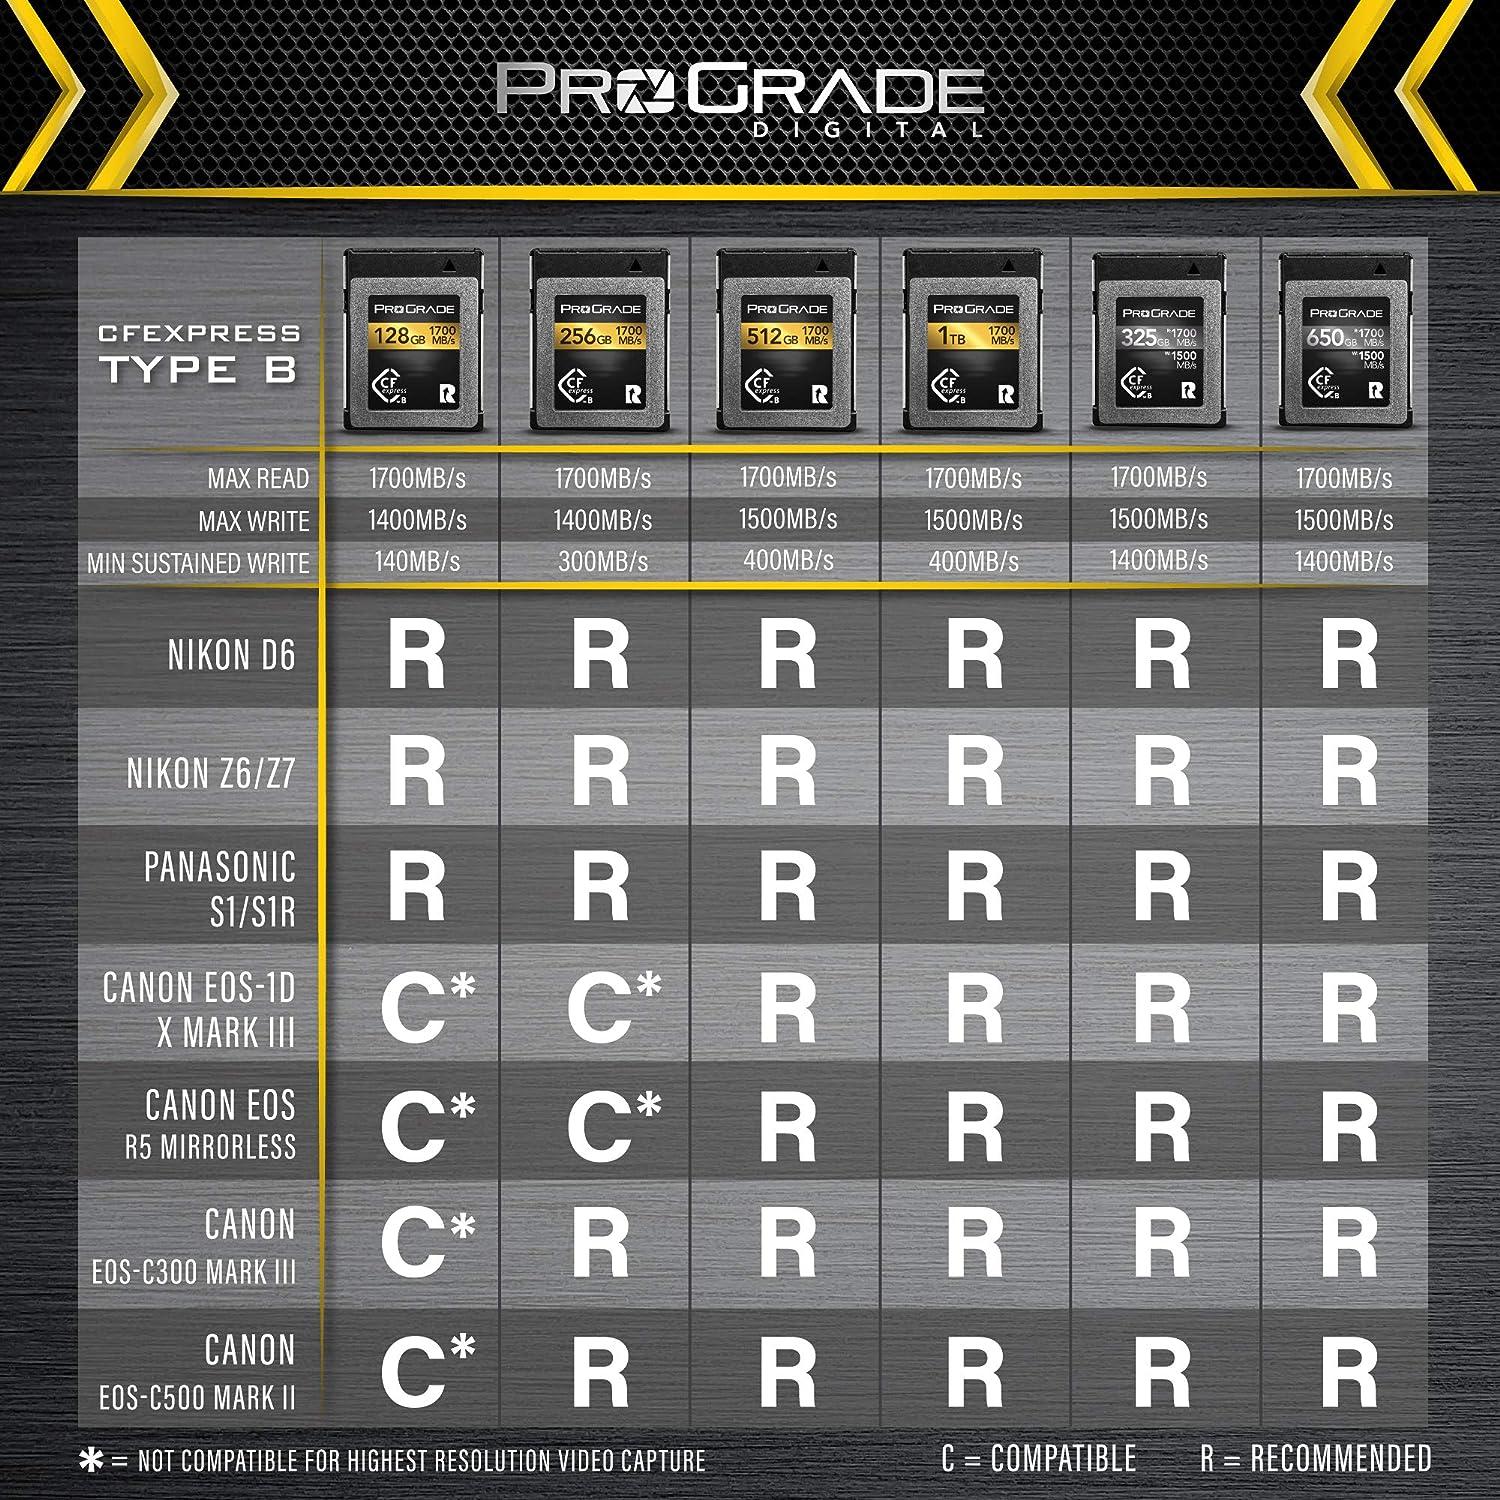 ProGrade Digital Memory Card - CFexpress Type B for Cameras